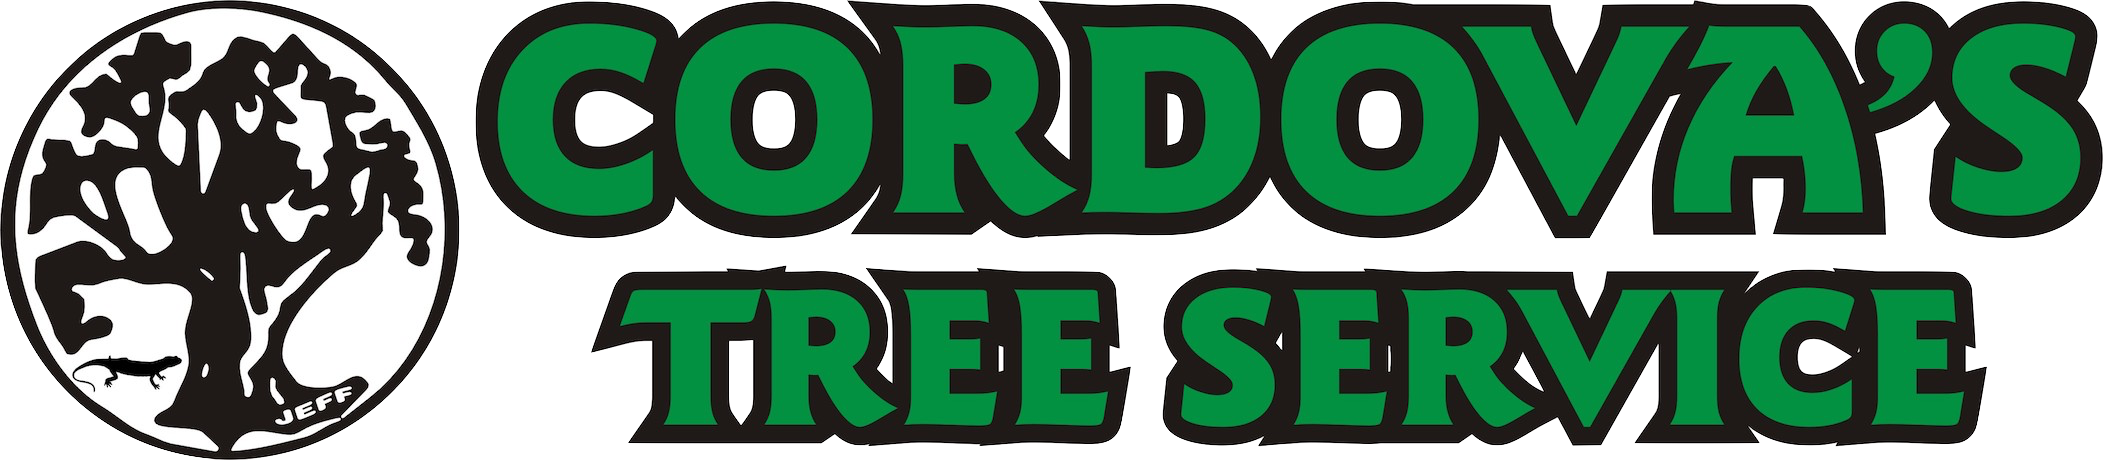 Cordova's Tree Service Inc. Logo